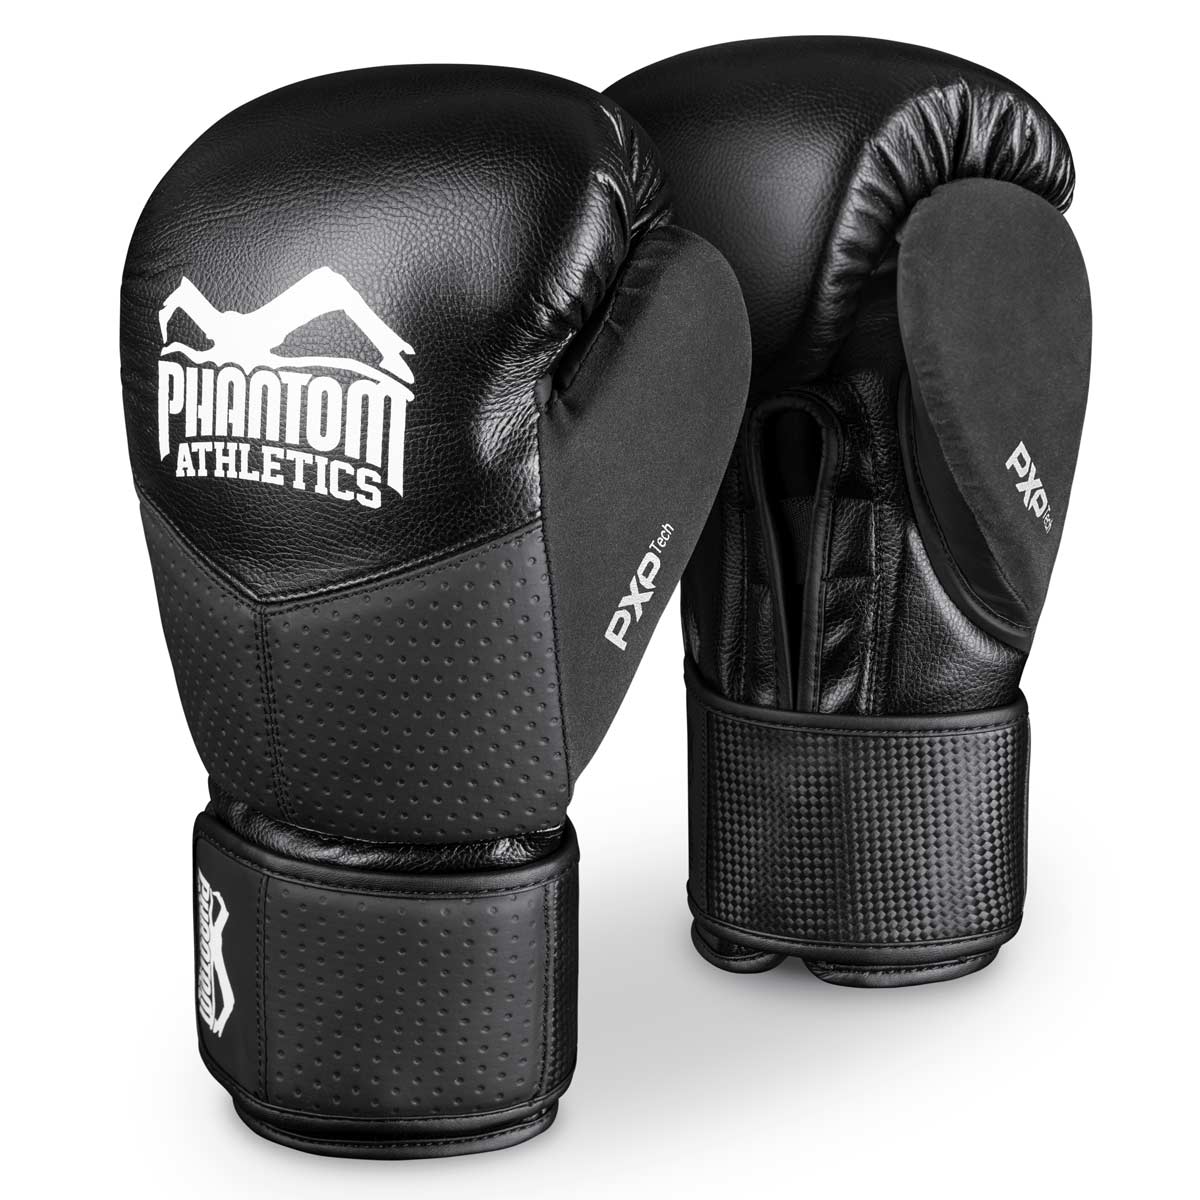 Buy boxing gloves training competition for & ATHLETICS - PHANTOM